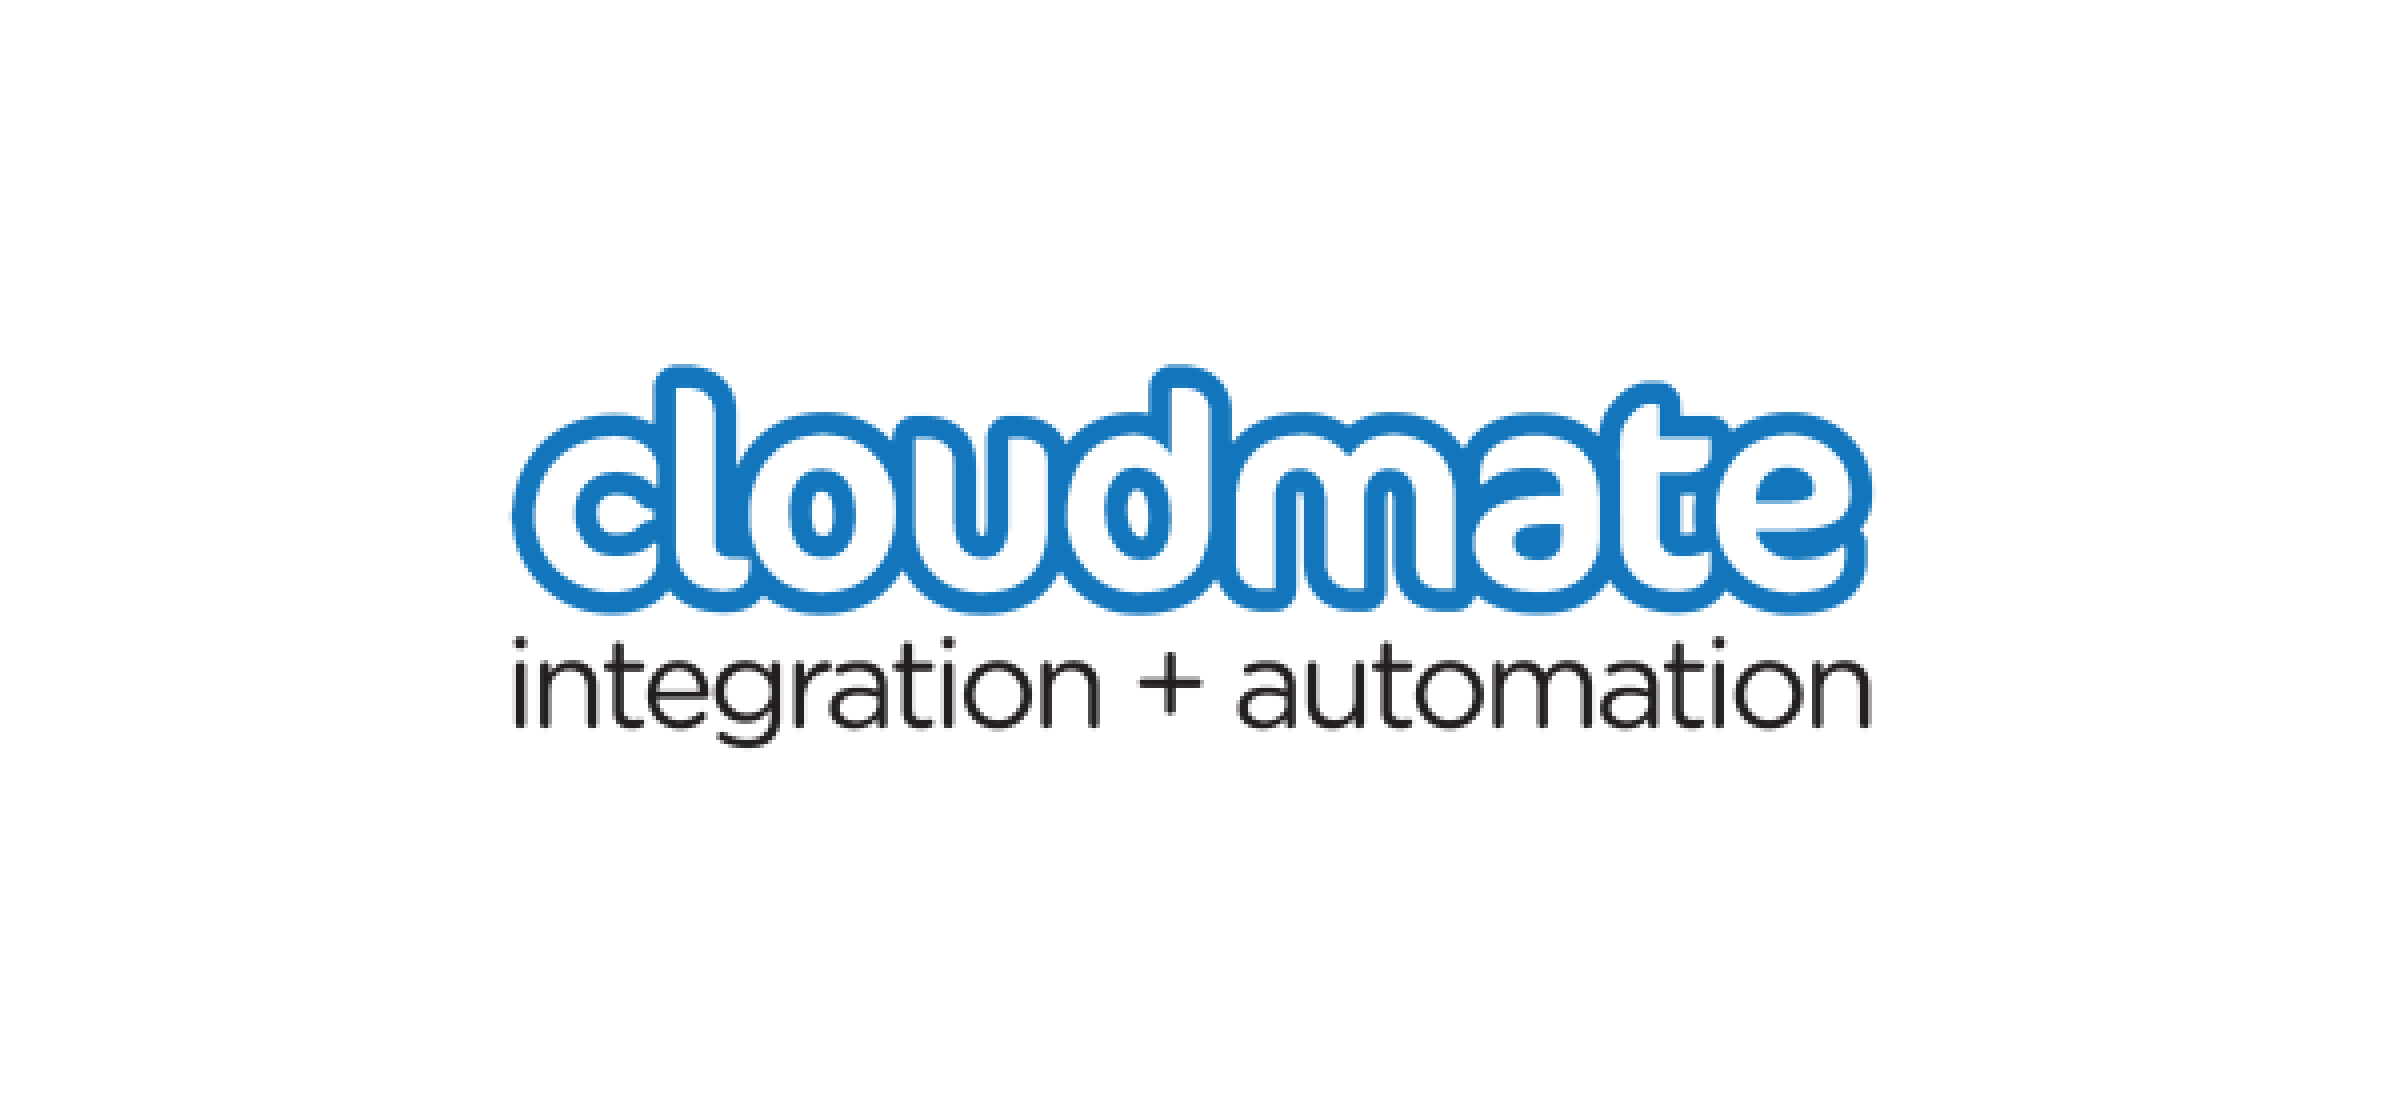 The Cloudmate logo